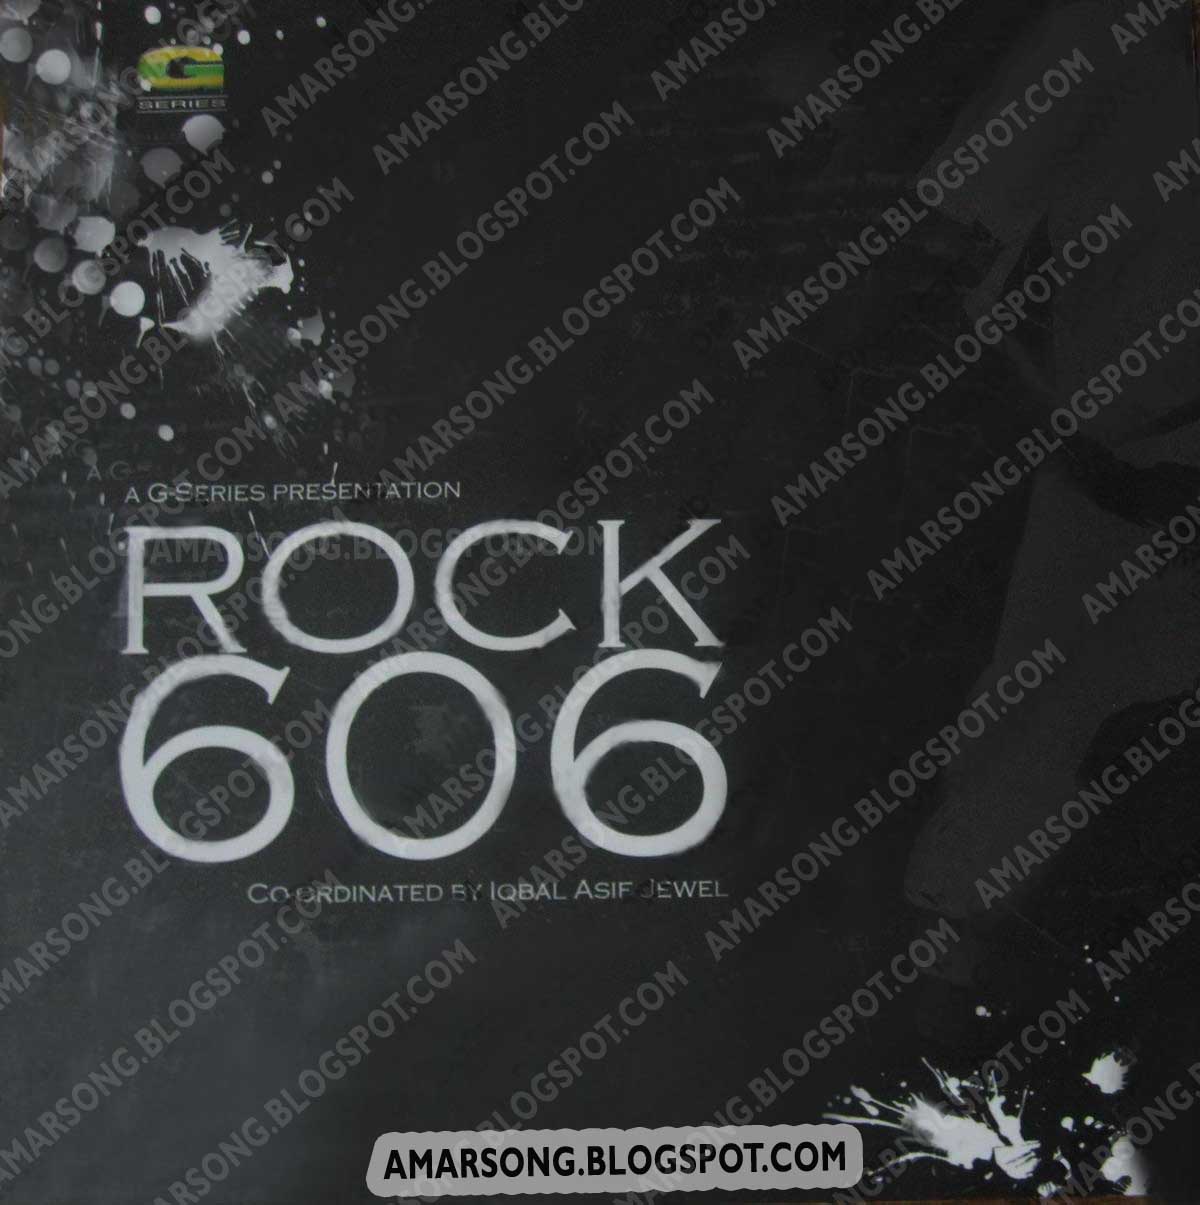 Rock 606 - Band Mixed (Eid Album 2011)